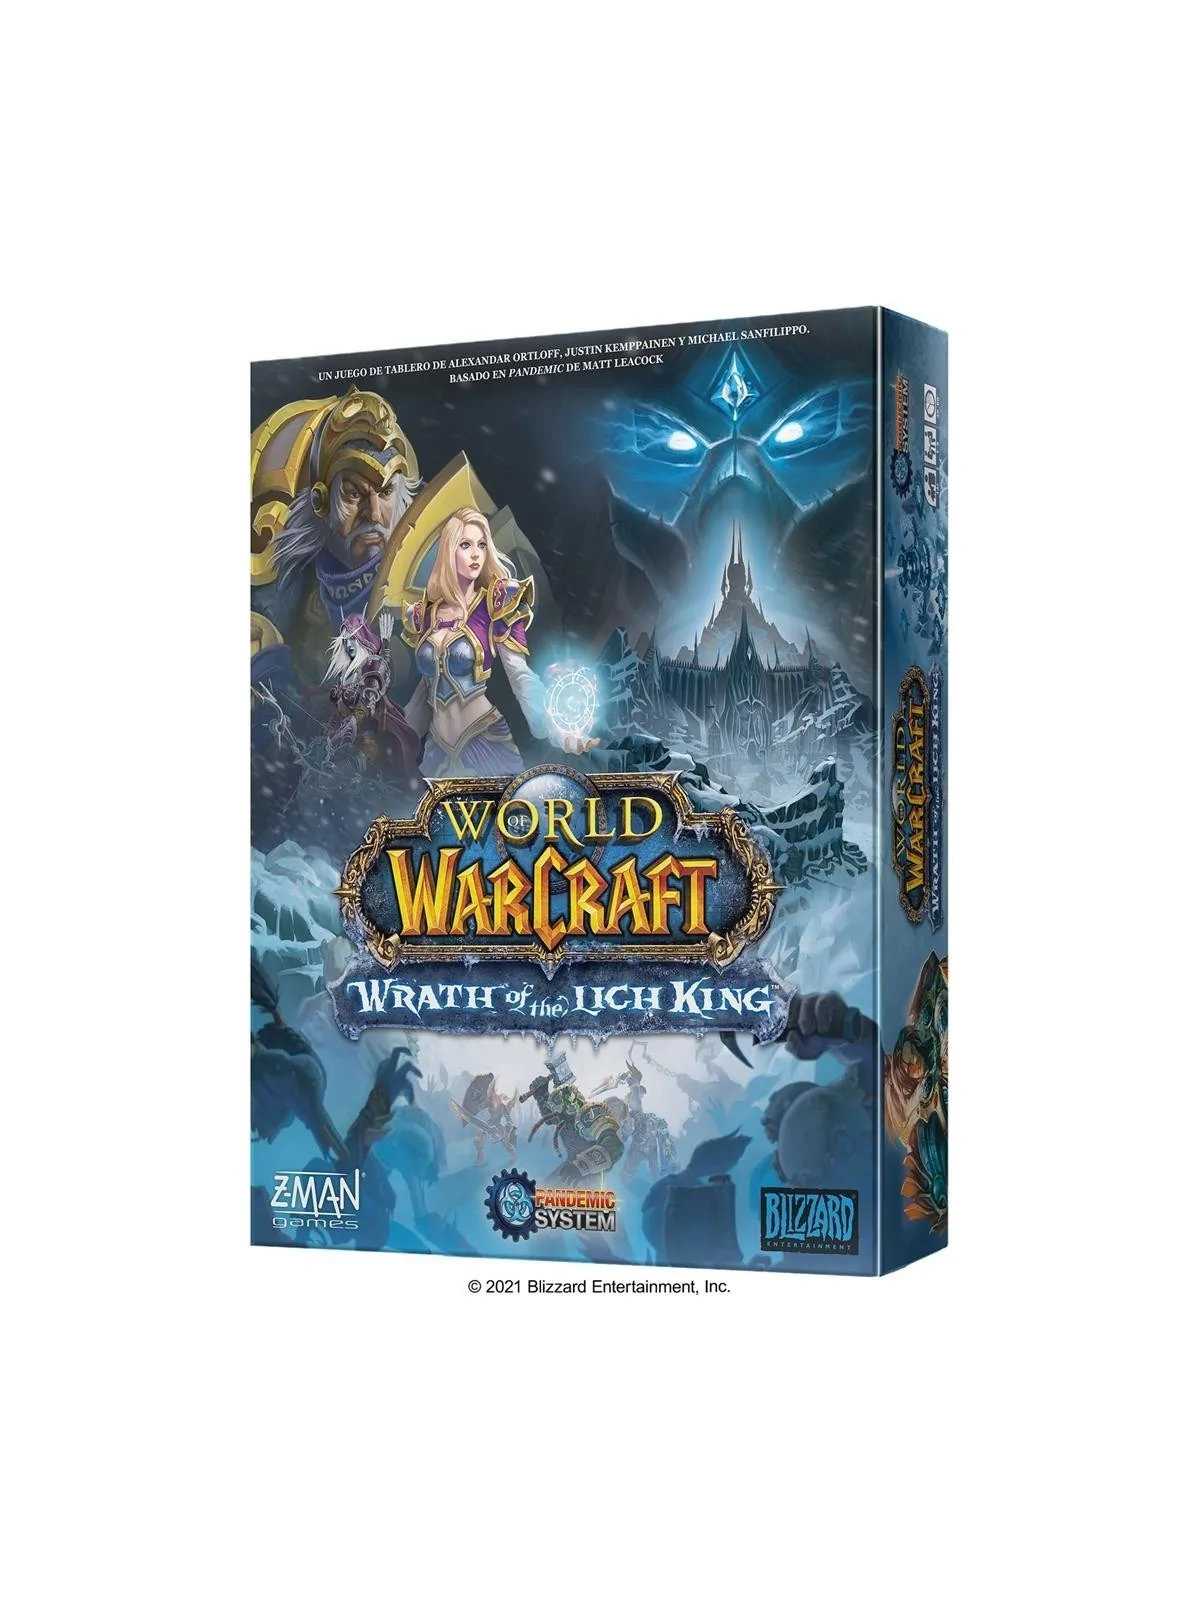 Comprar World of Warcraft: Wrath of the Lich King barato al mejor prec